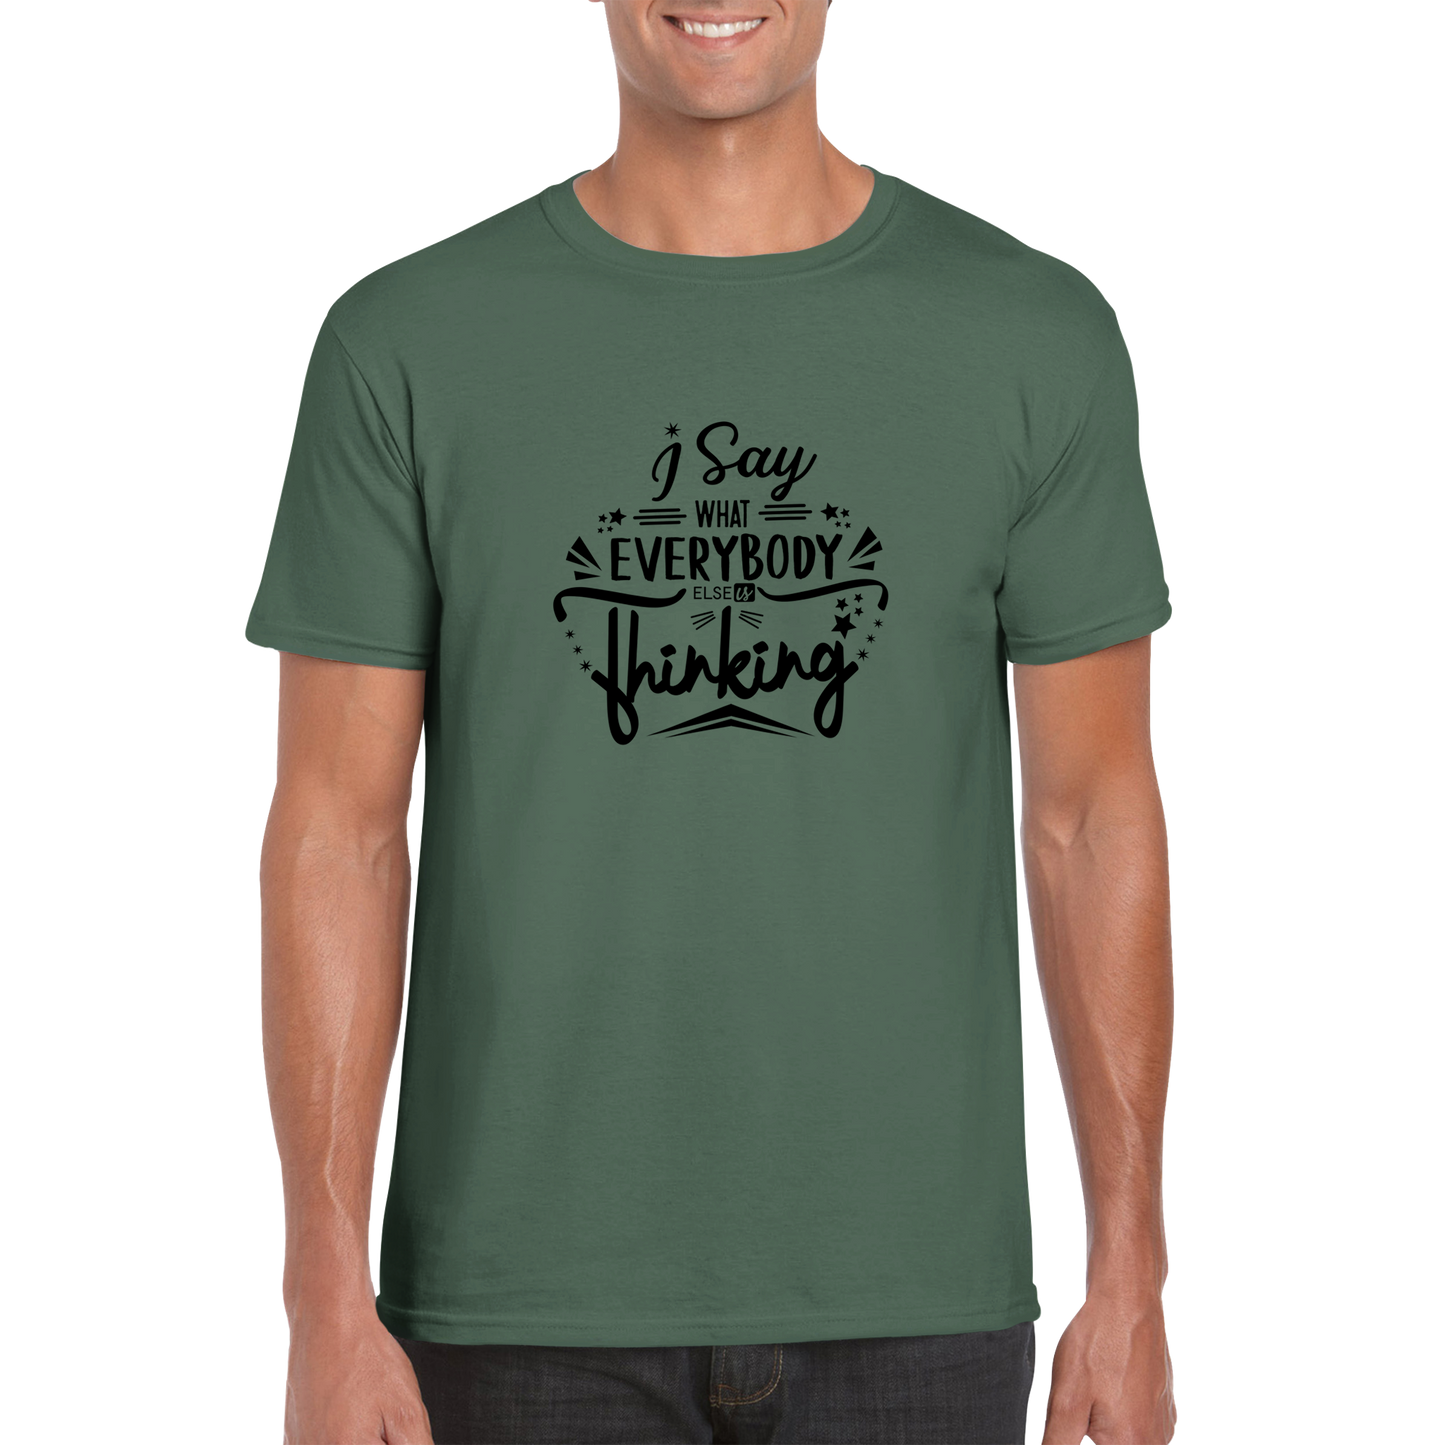 What Everyones Thinking Sarcasm Shirt - Classic Unisex Crewneck T-shirt